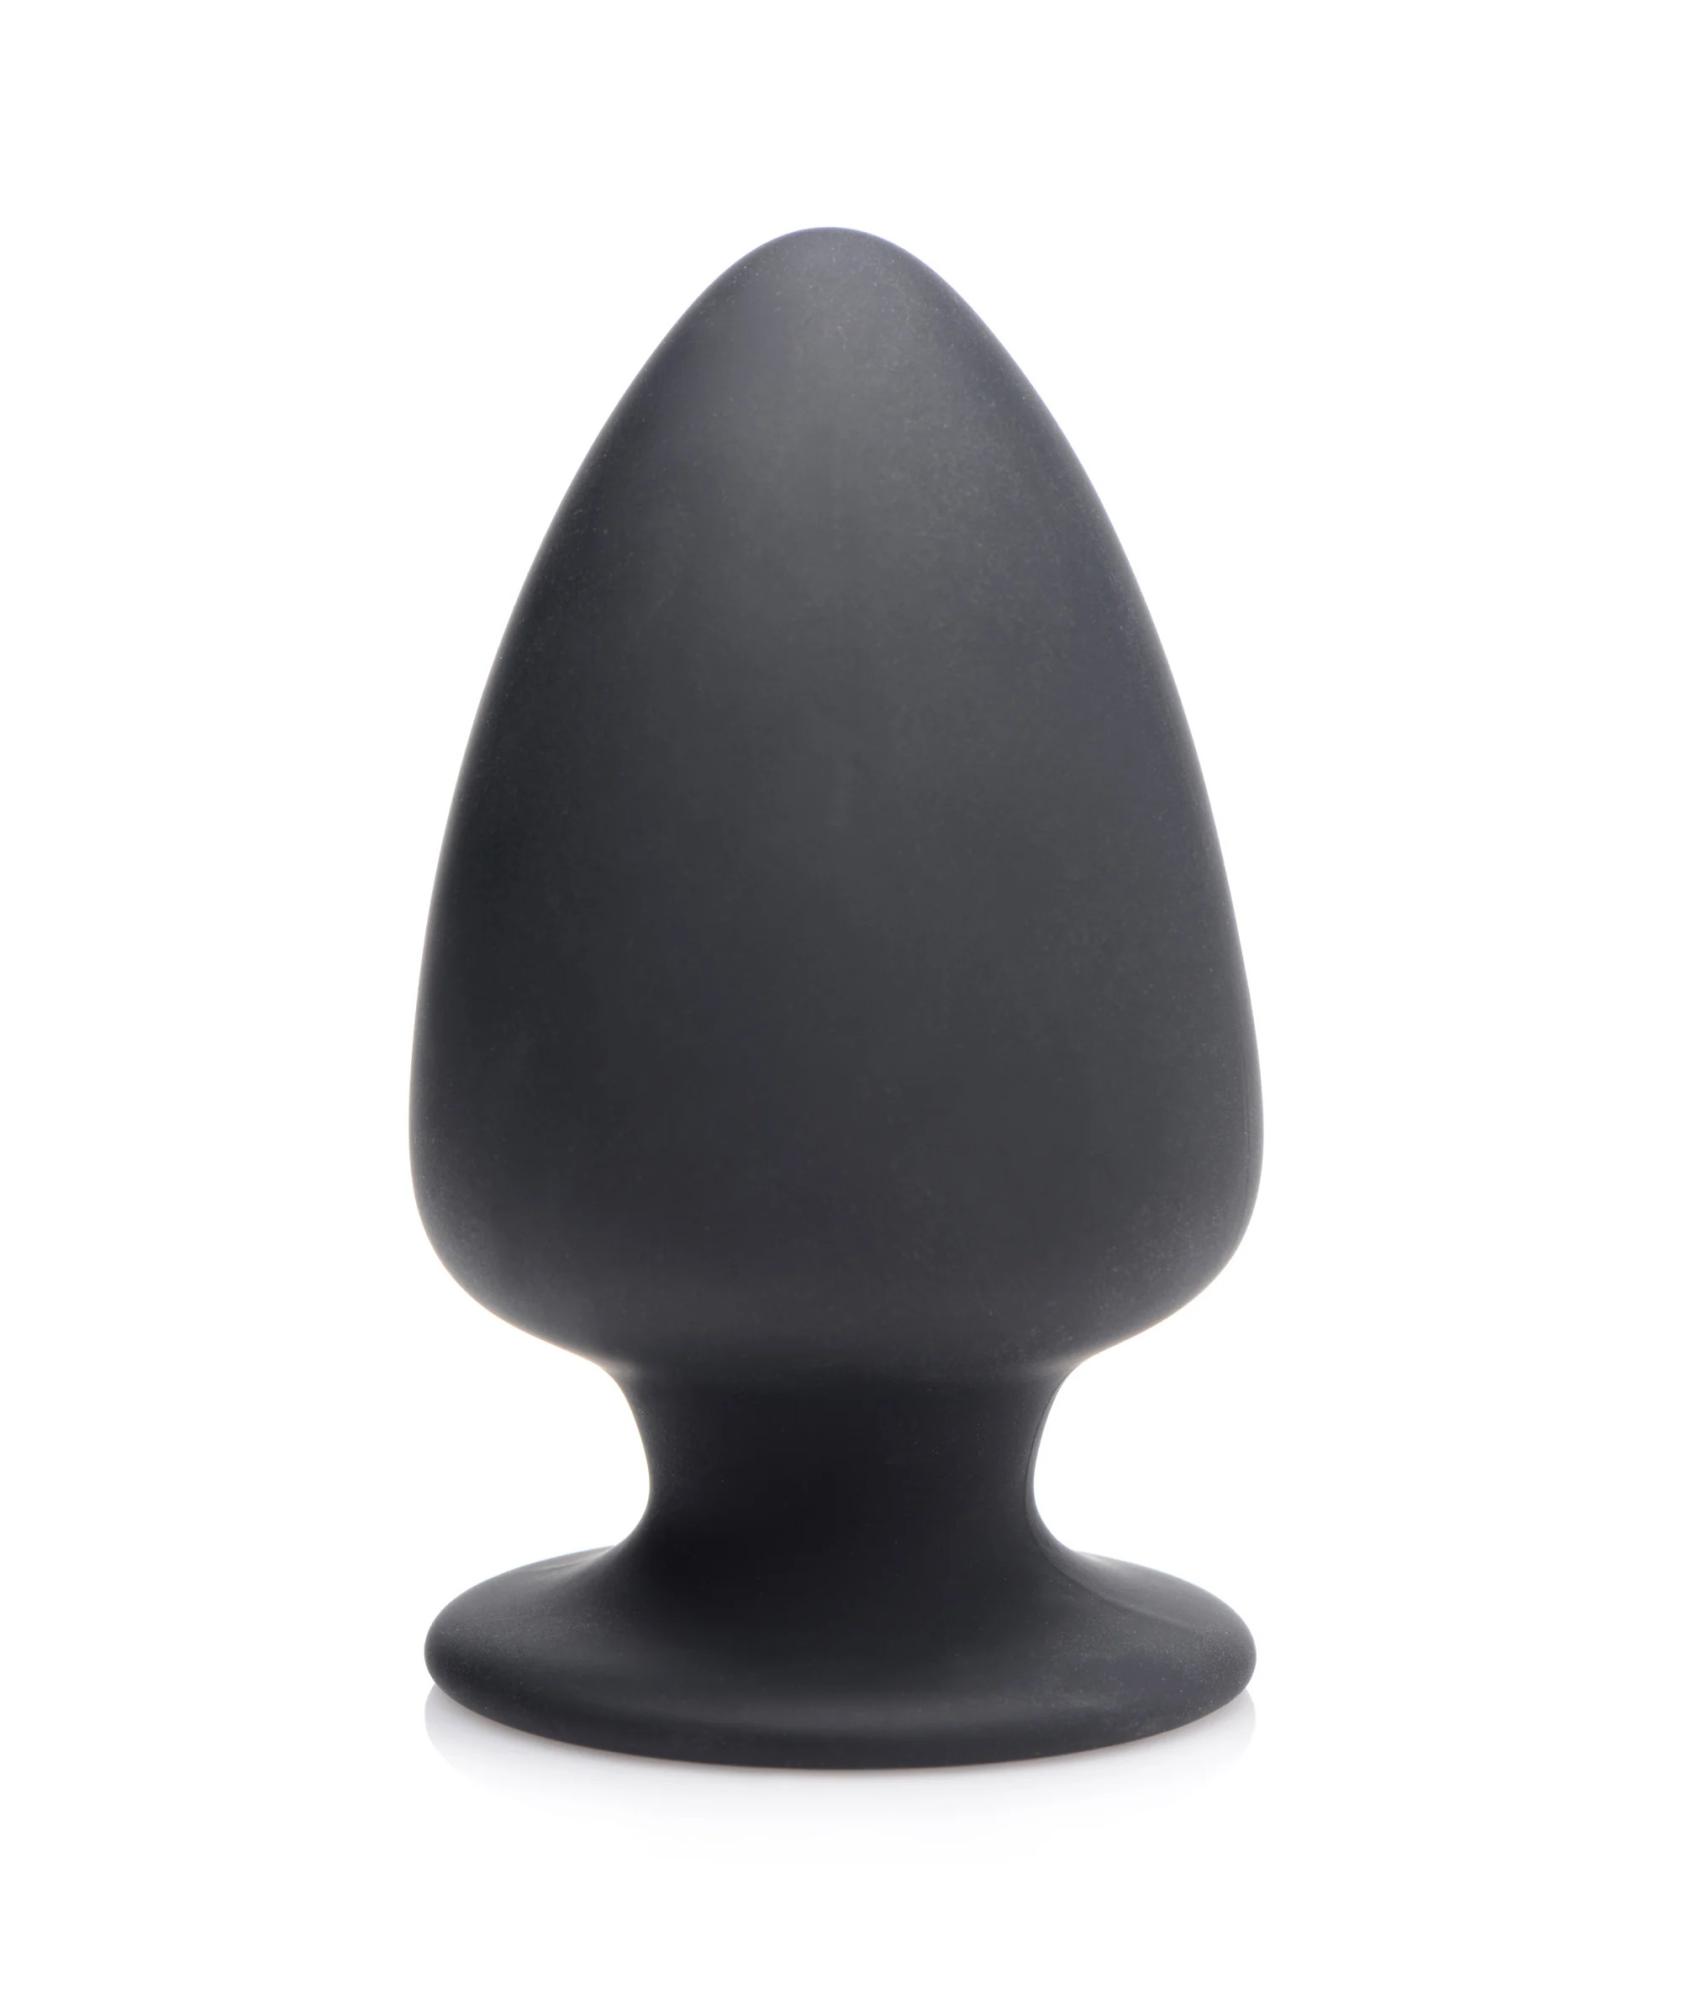 Squeeze-It Silicone Anal Plug Medium - мягкая гибкая анальная пробка, M 11х6.4 см (чёрный)